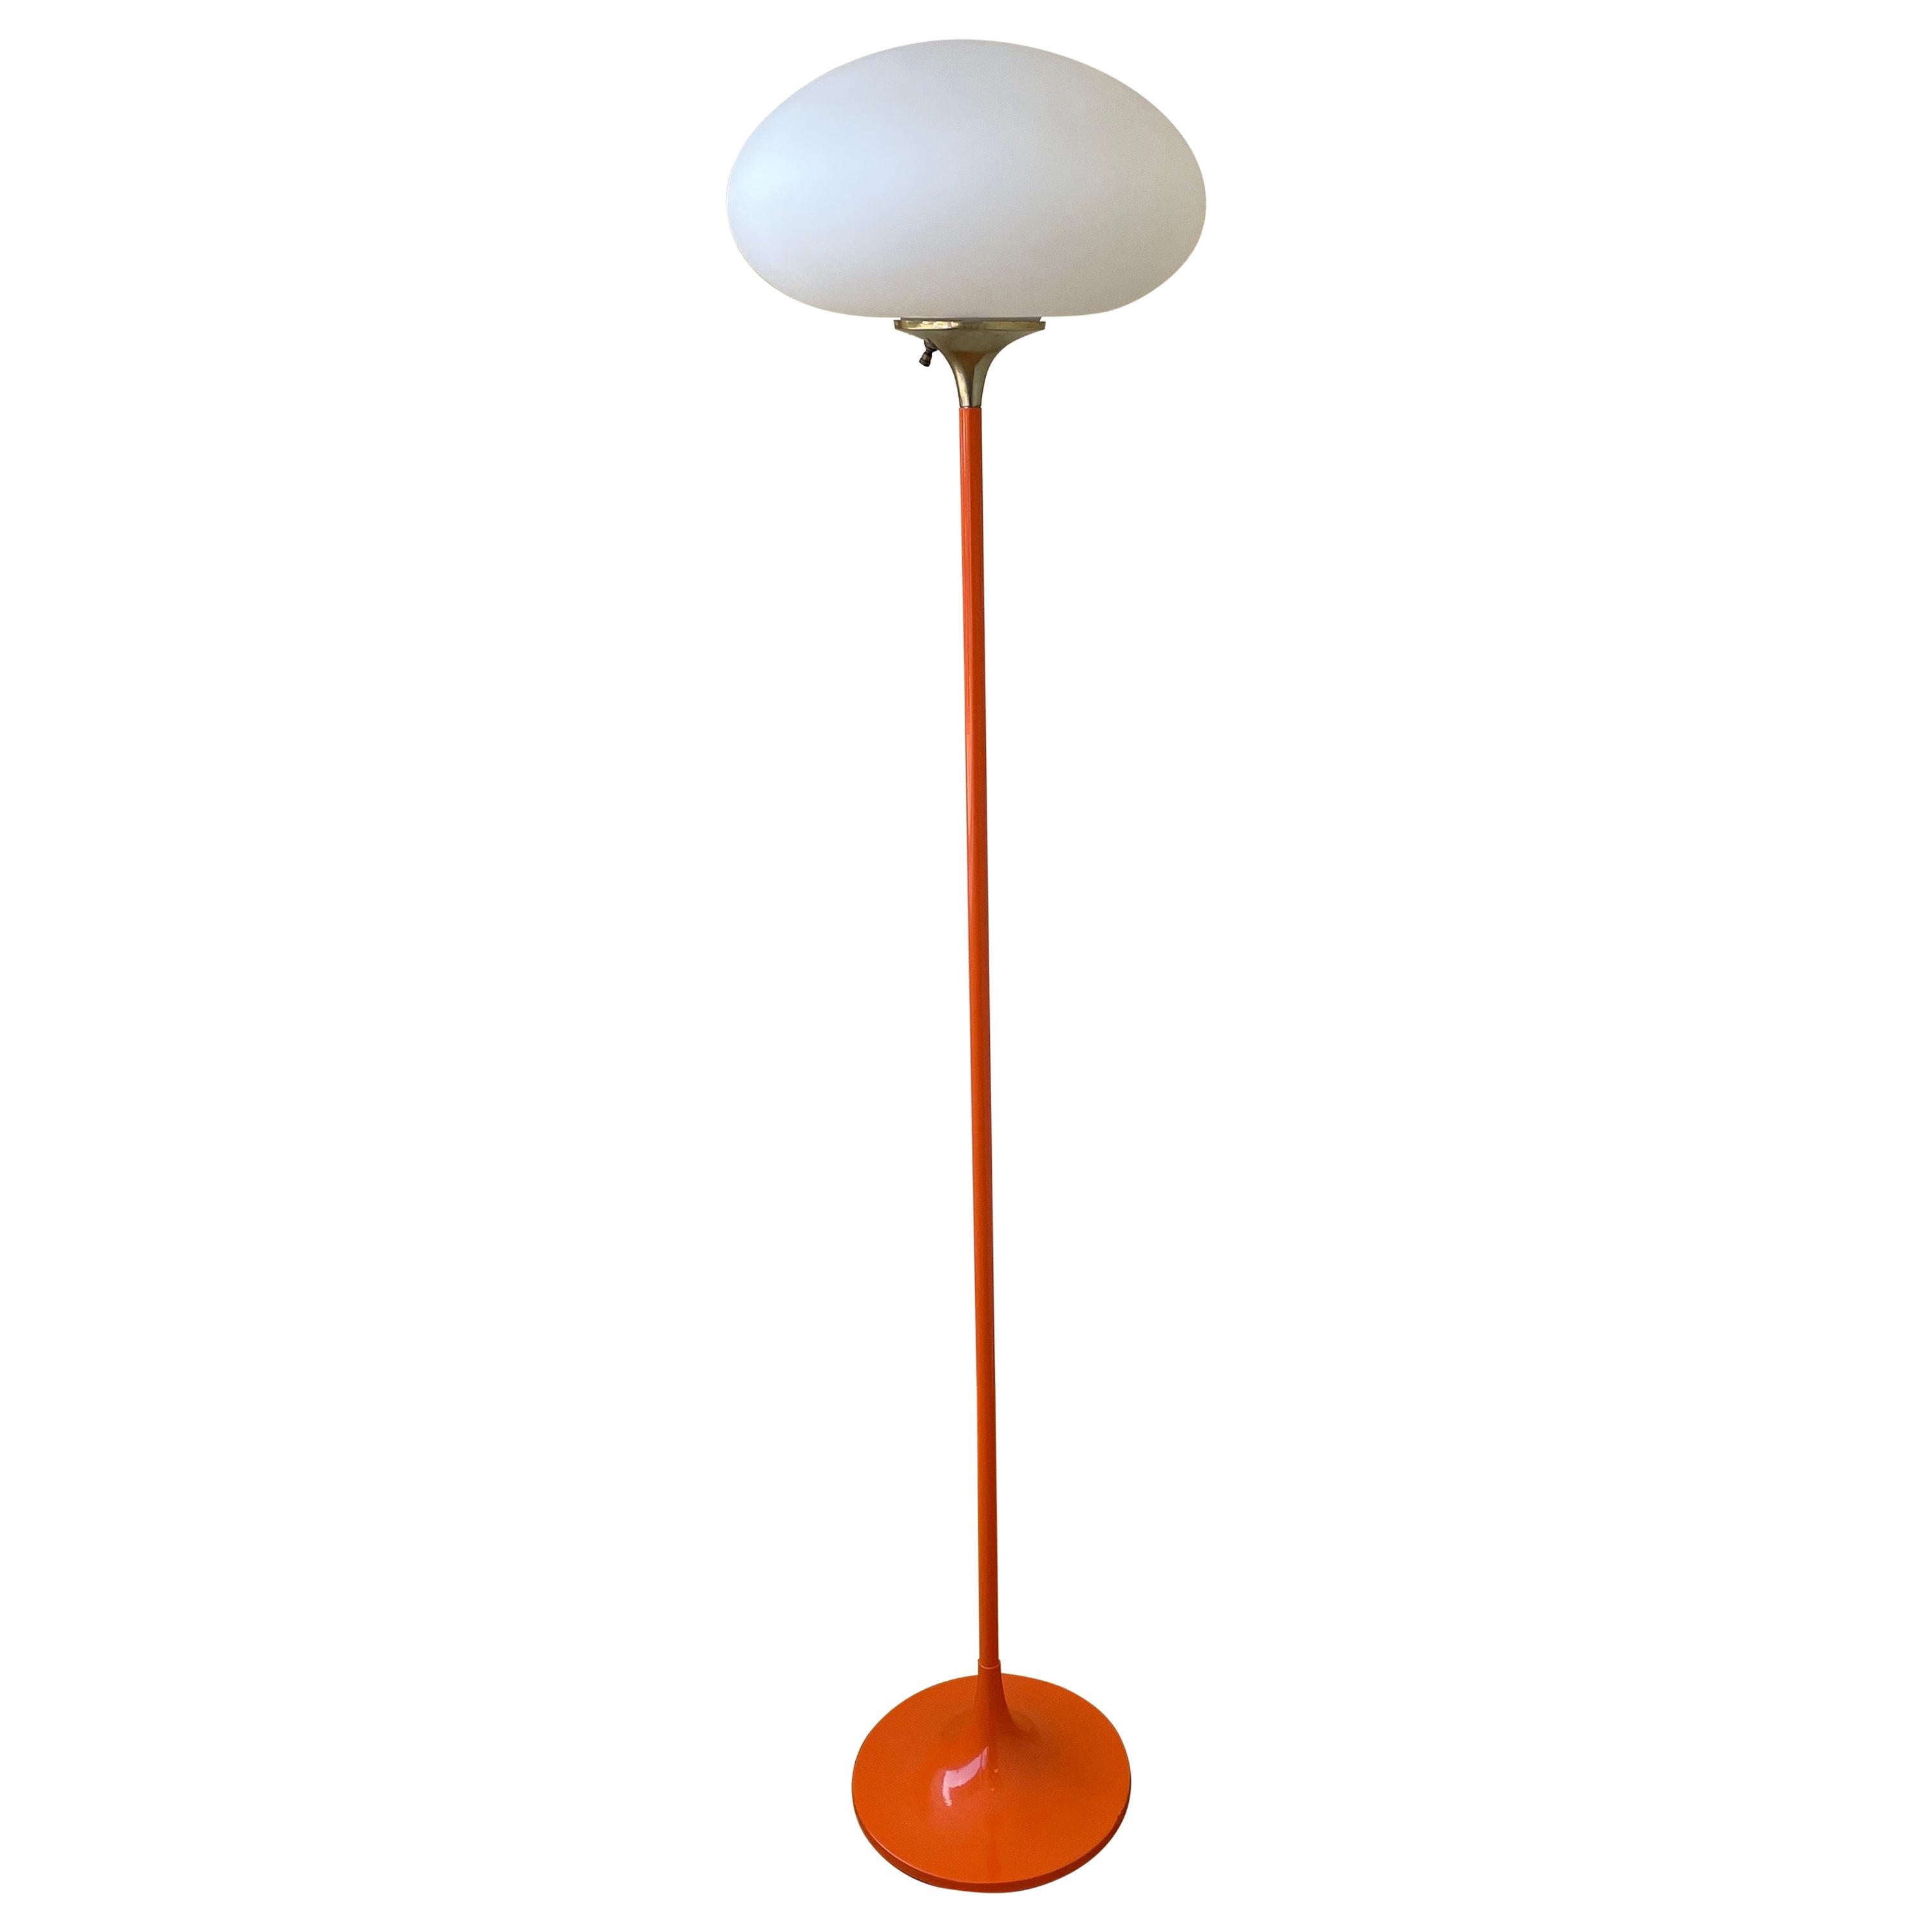 Iconic Space Age Laurel Lighting Mushroom Floor Lamp in Orange & Brass